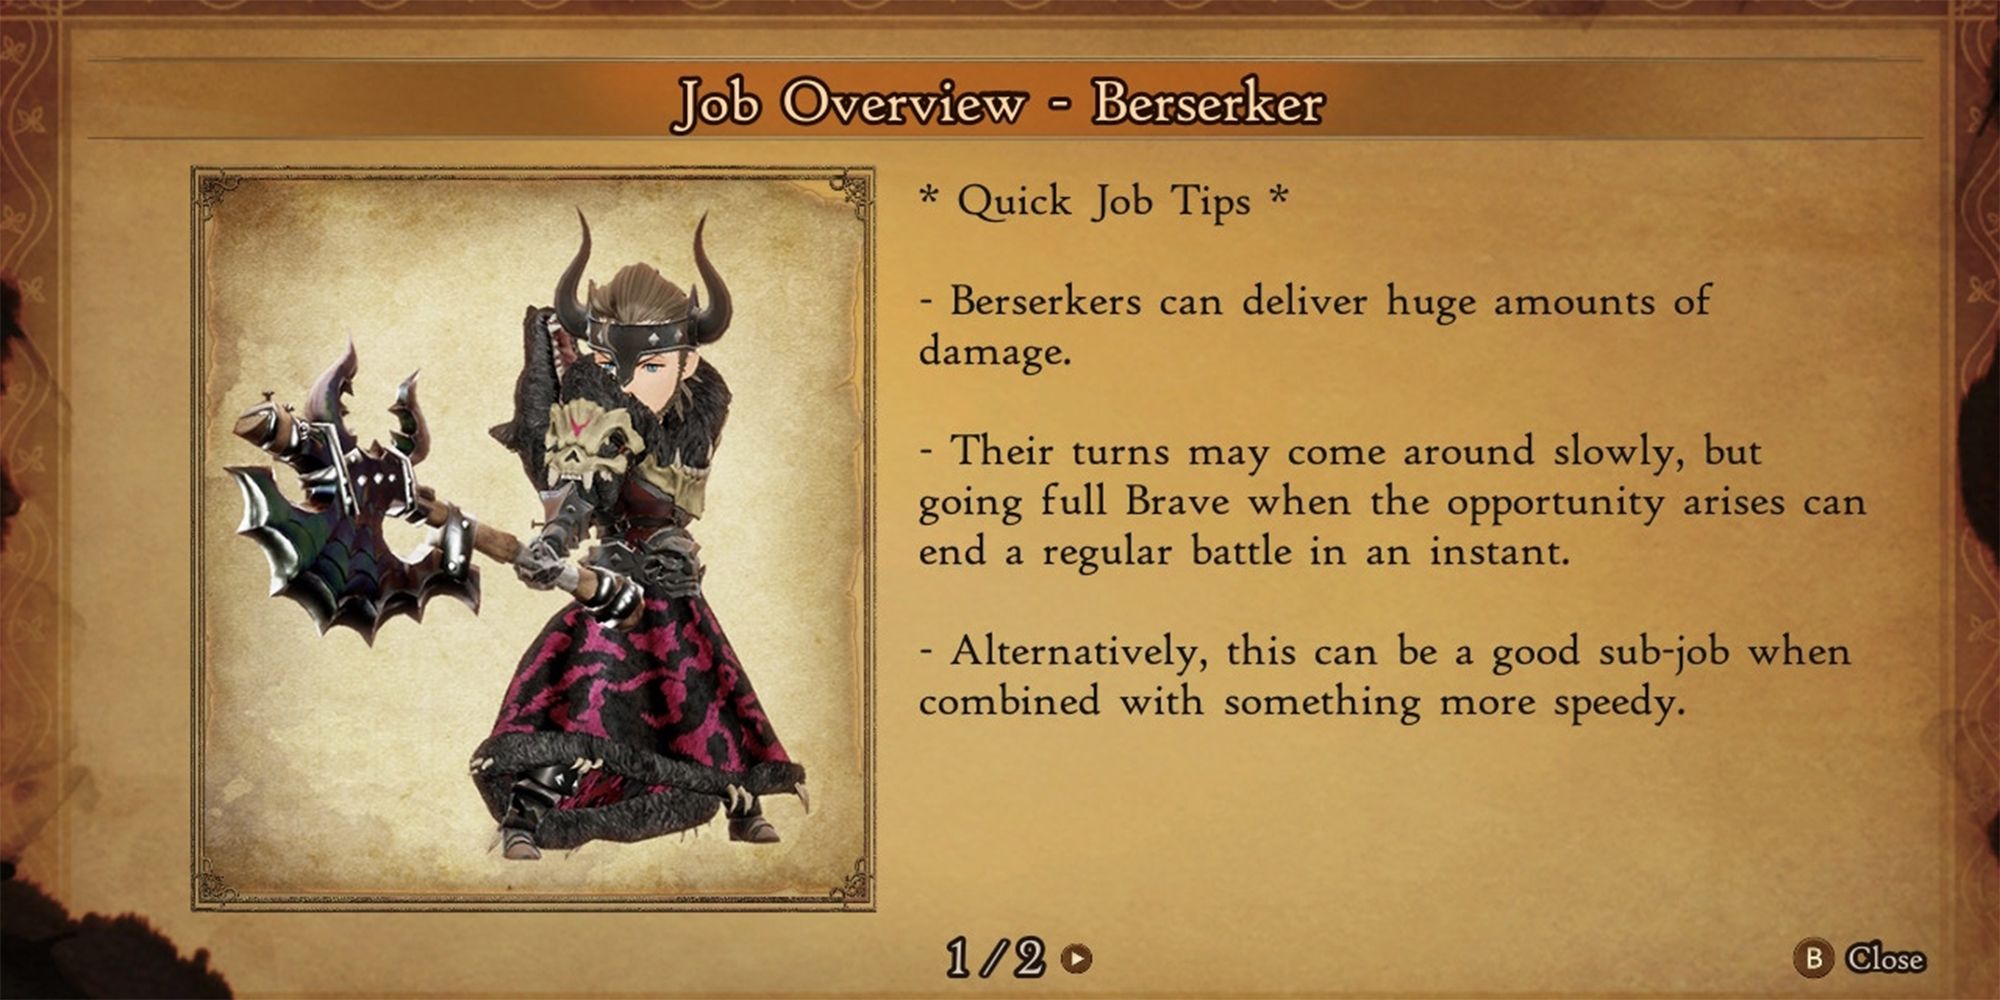 berserker job tutorial page with quick tips